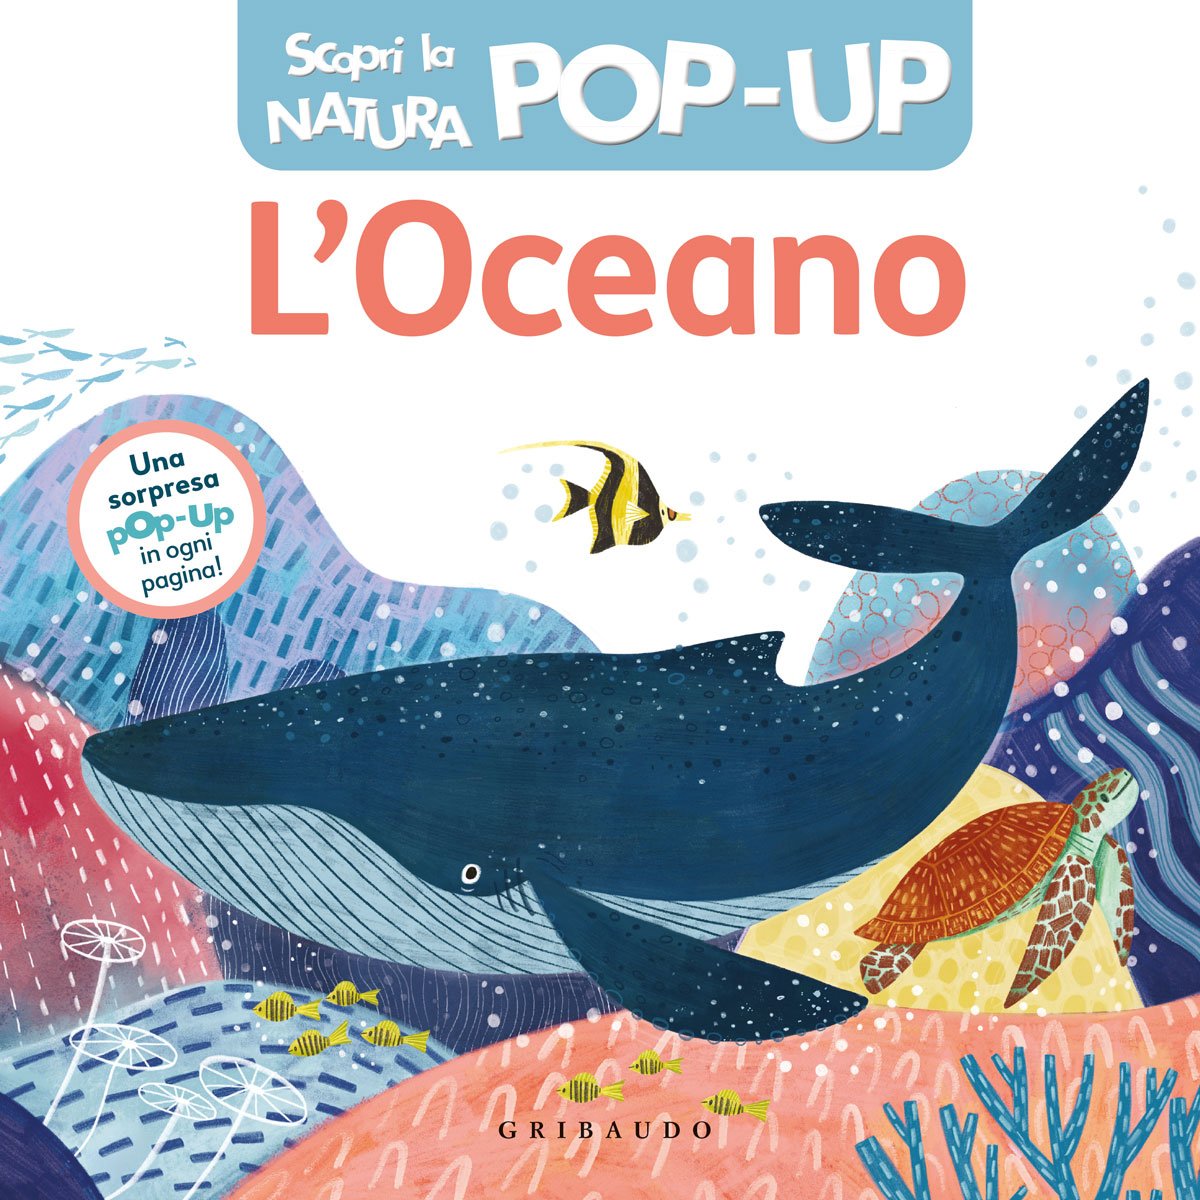 Scopri la natura POP-UP - L'Oceano